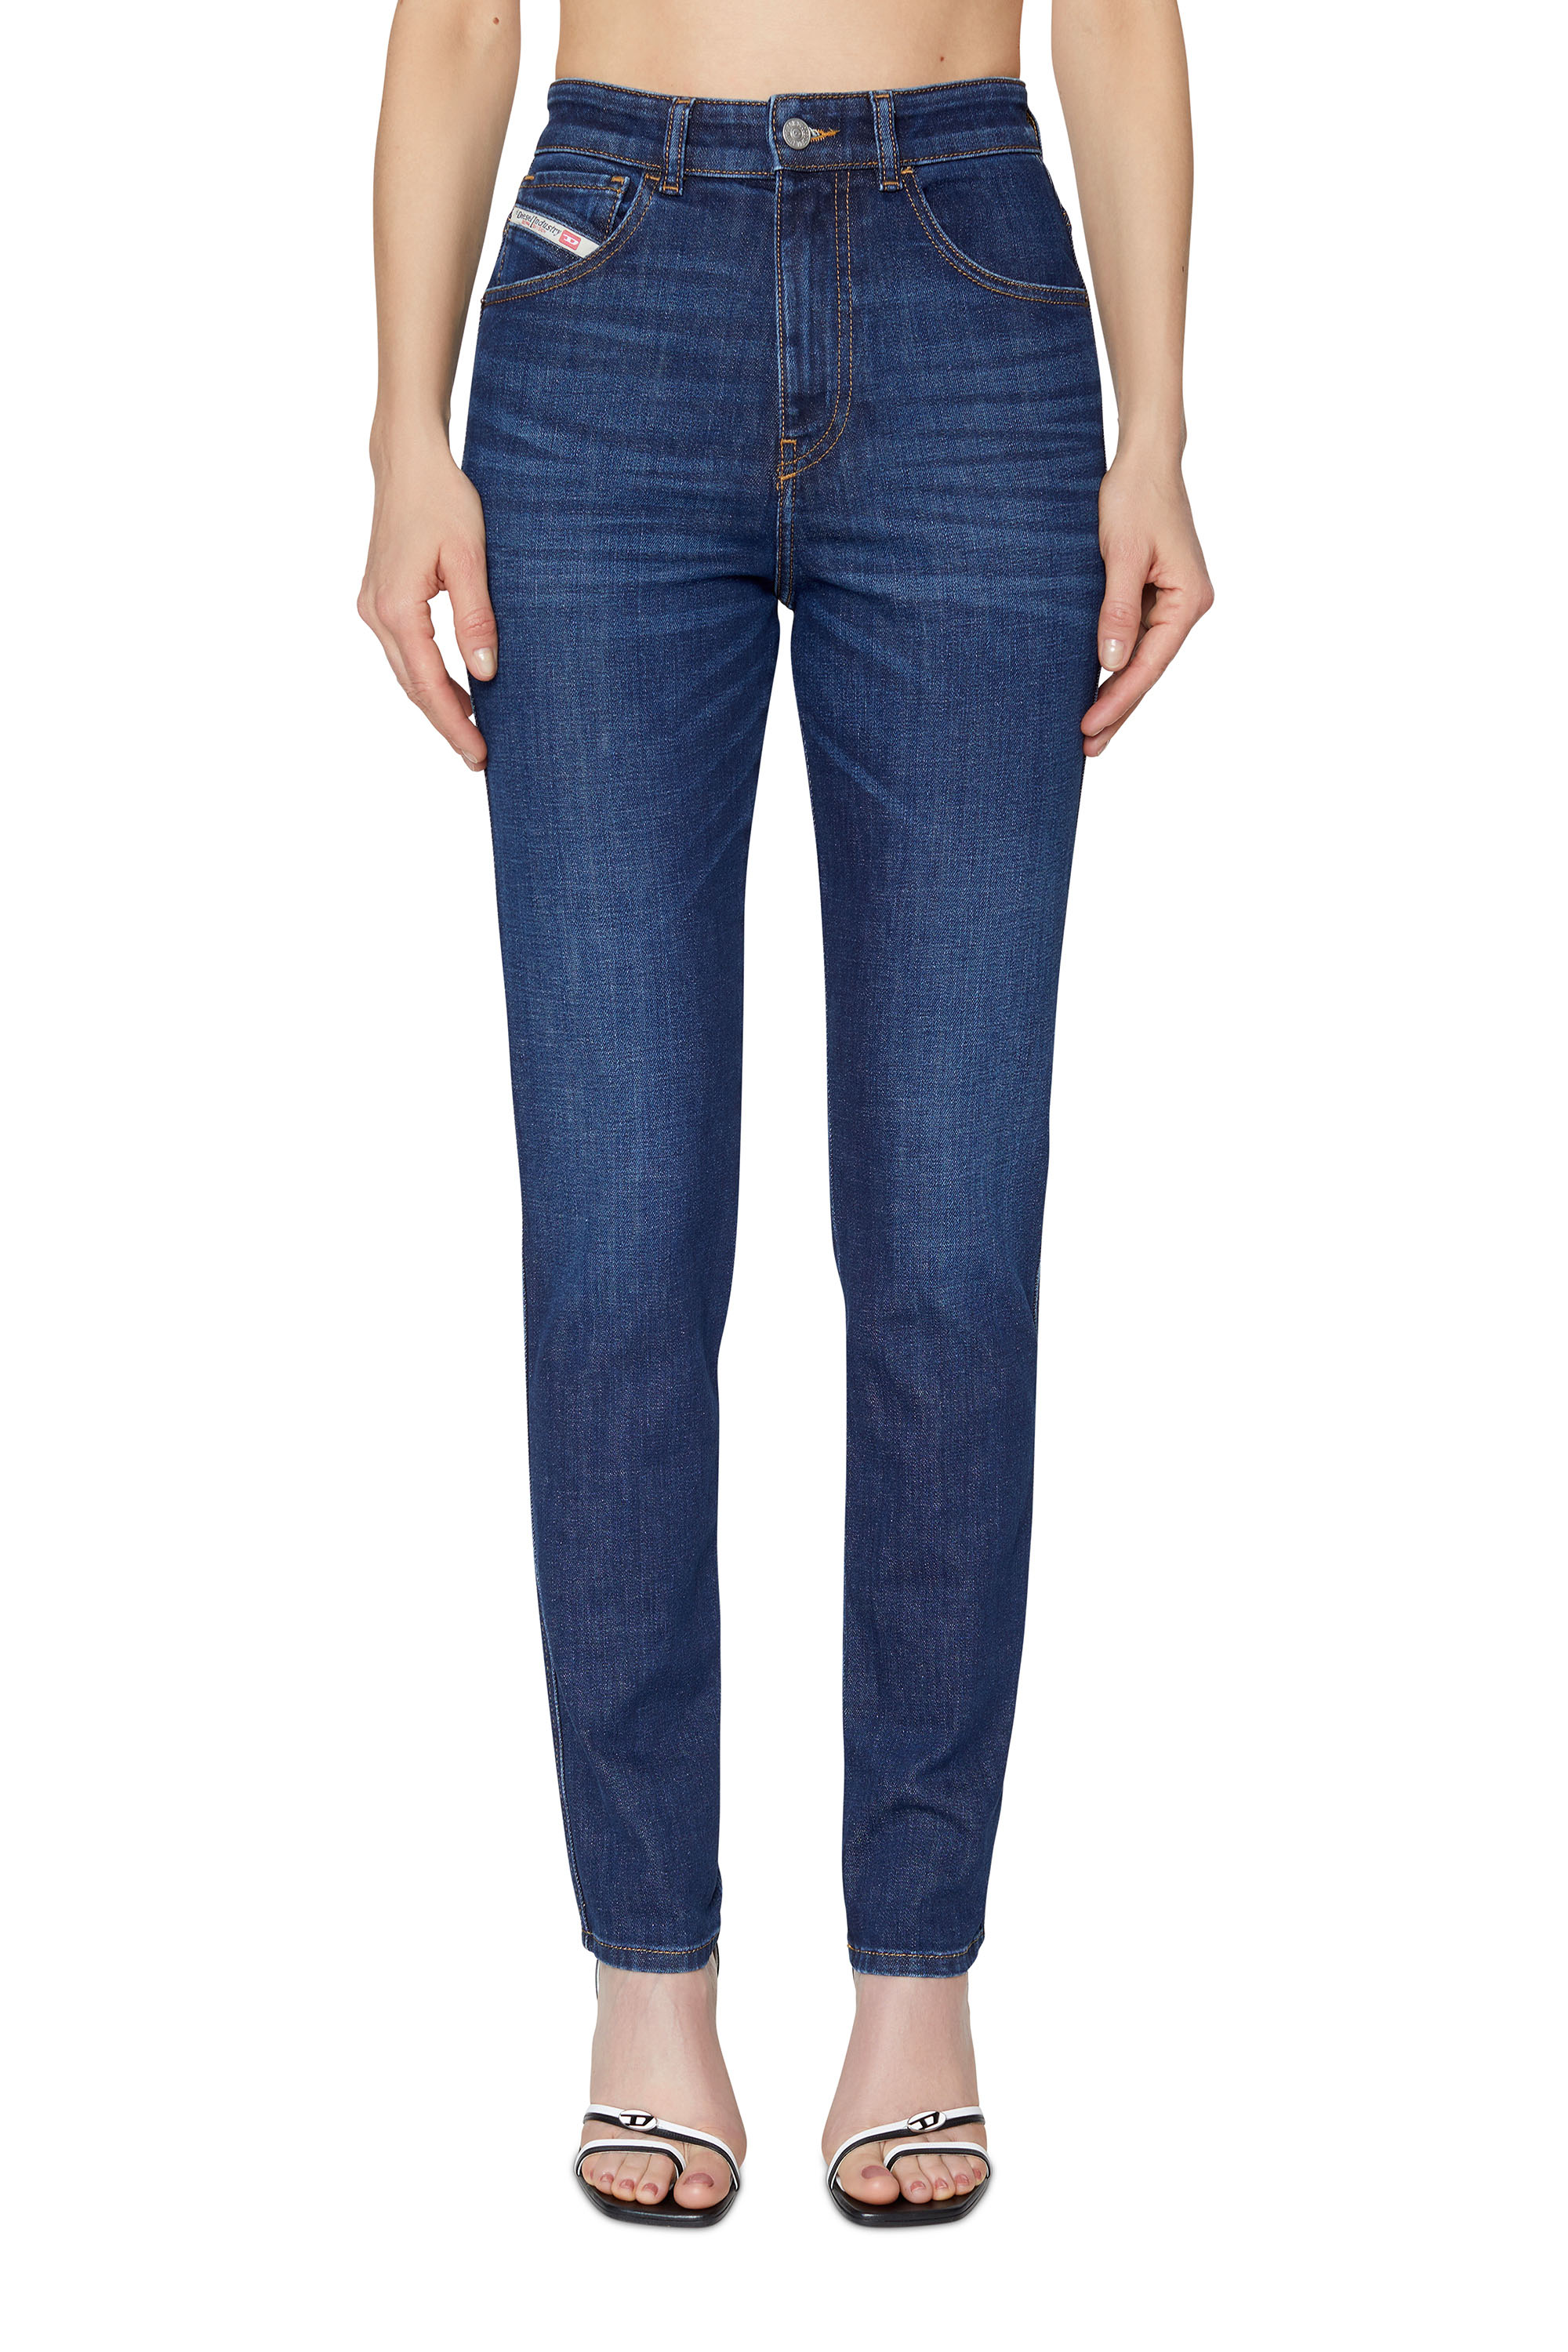 Womens Clothing Jeans Straight-leg jeans DIESEL Denim Grupee R51y8 Jeans in Blue 